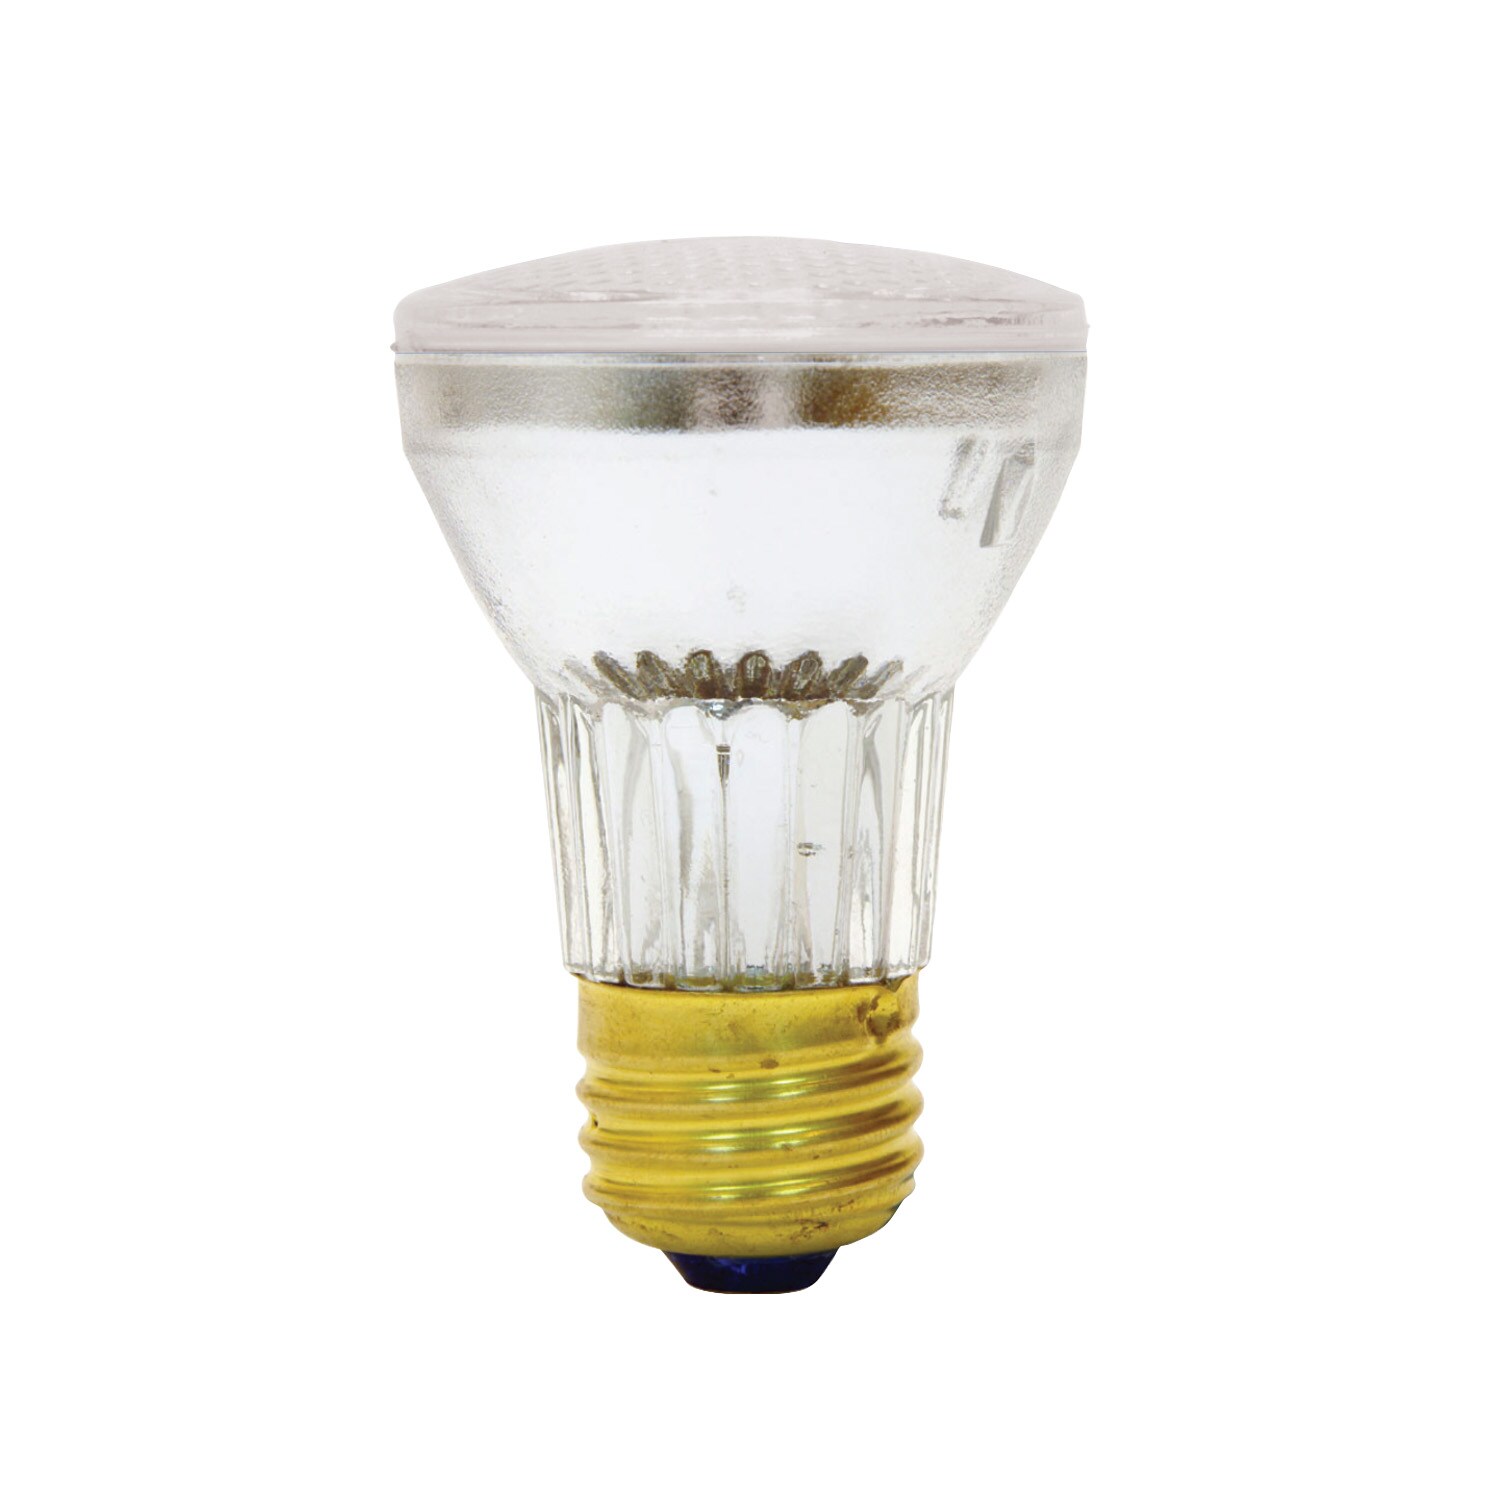 Voorzitter haspel sla GE Classic 60-Watt EQ PAR16 Dimmable Warm White Reflector Flood Halogen  Light Bulb (2-Pack) at Lowes.com